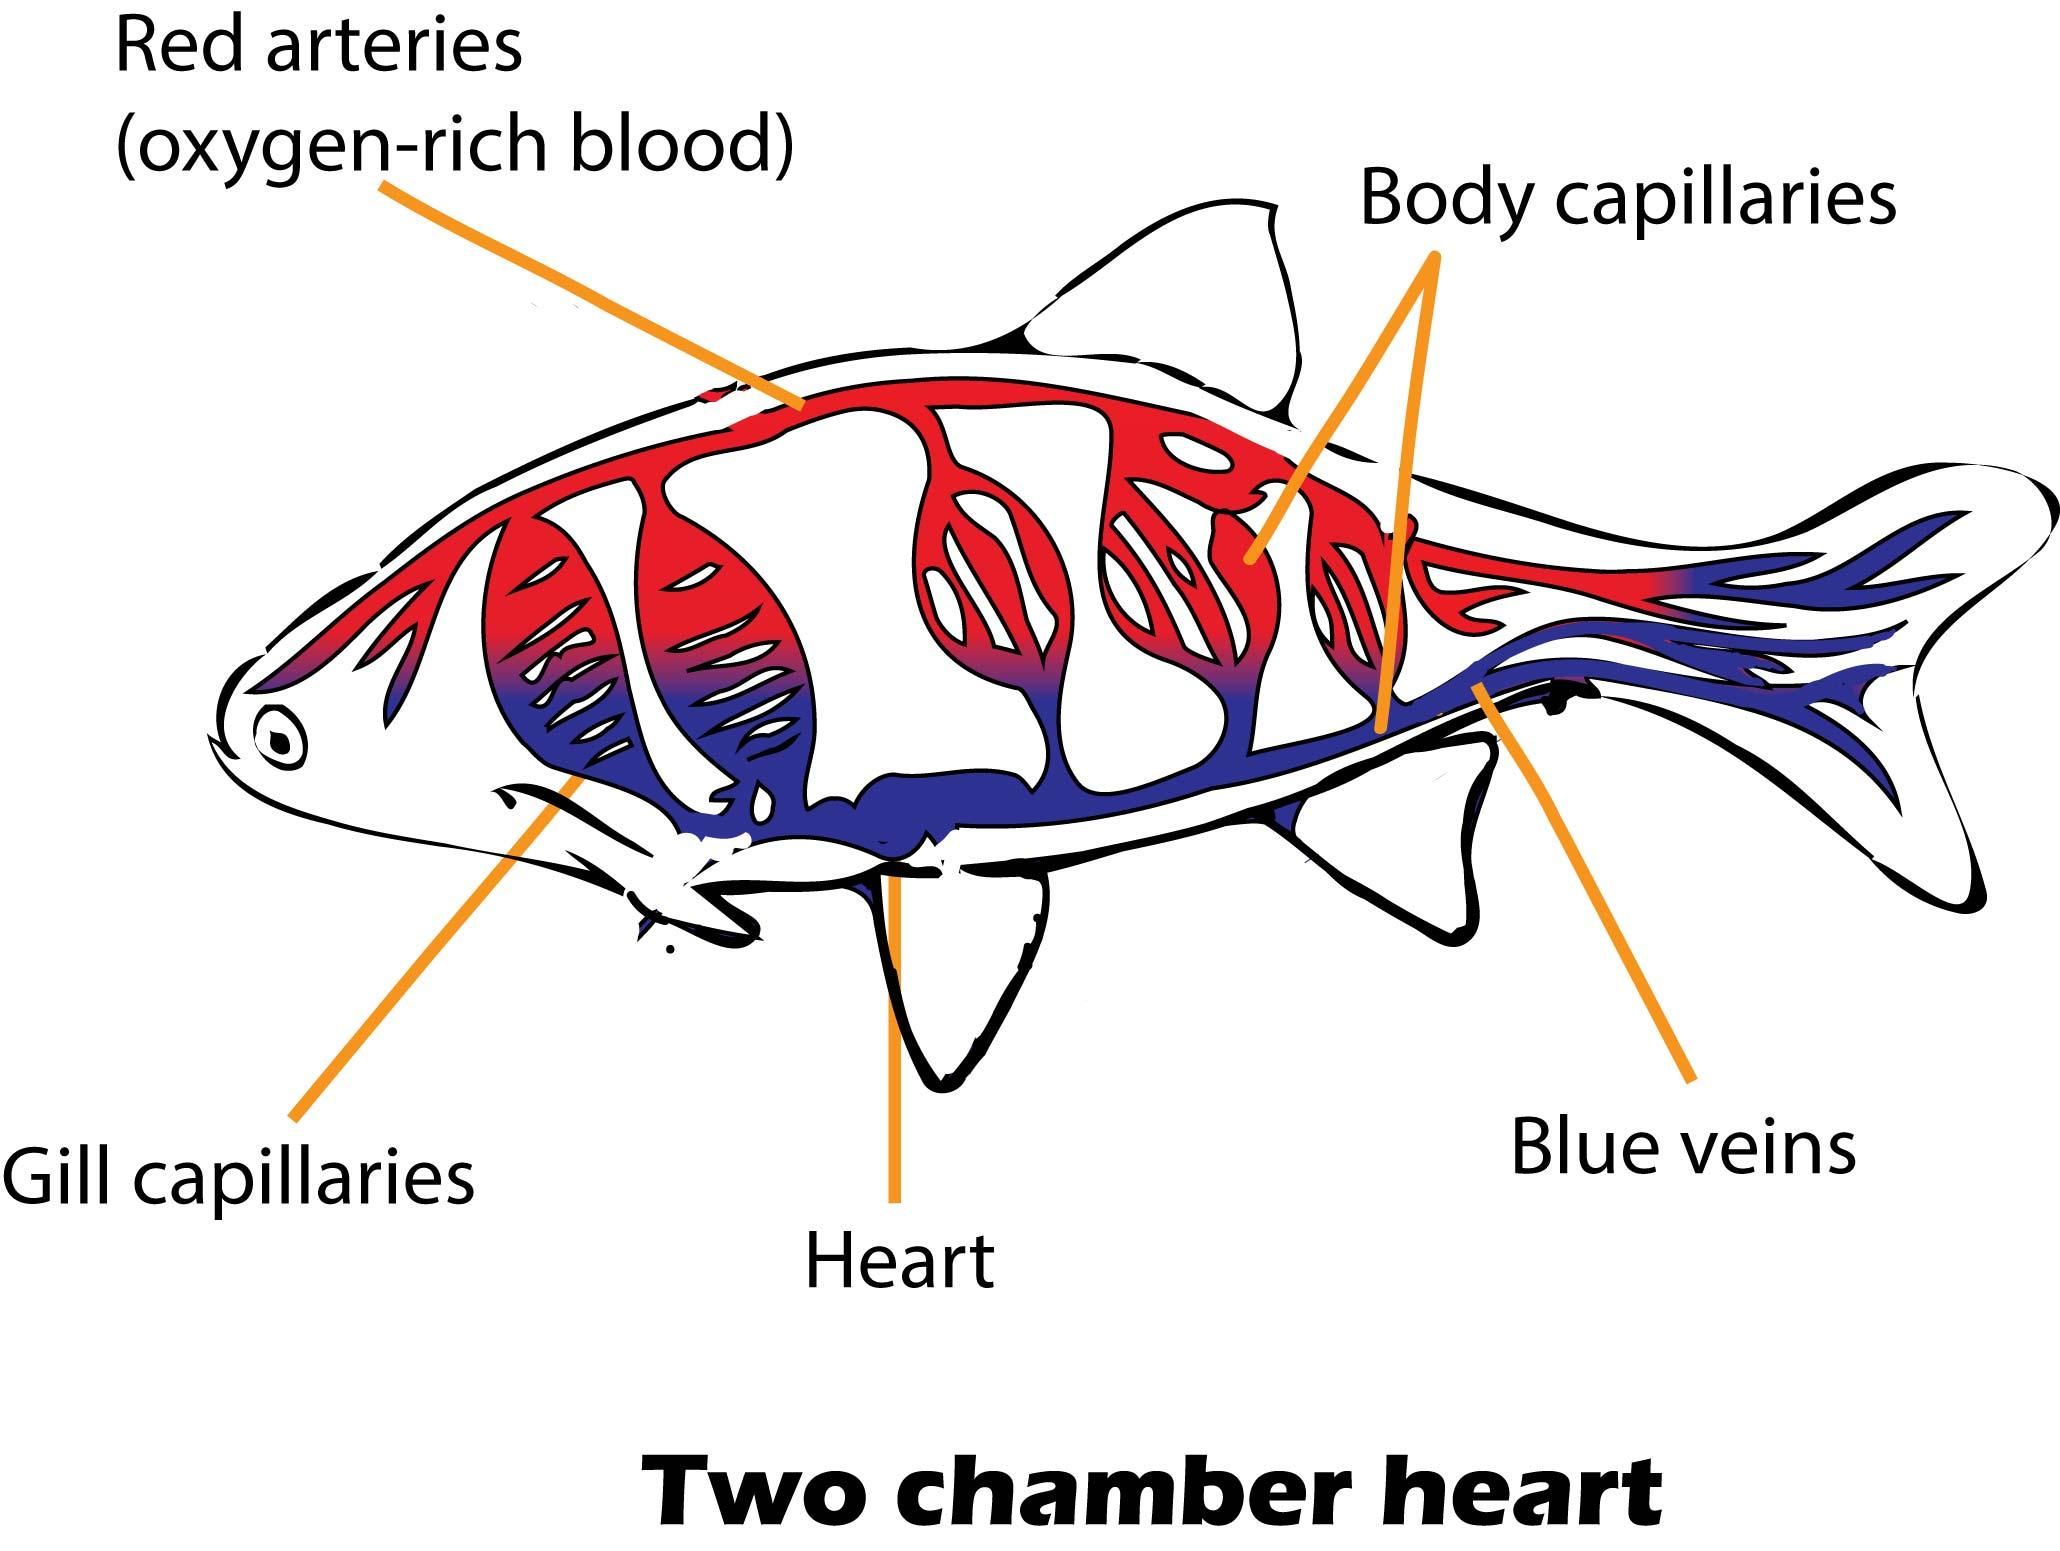 Two chambered heart occurs inA) CrocodilesB) FishC) AvesD) Amphibians